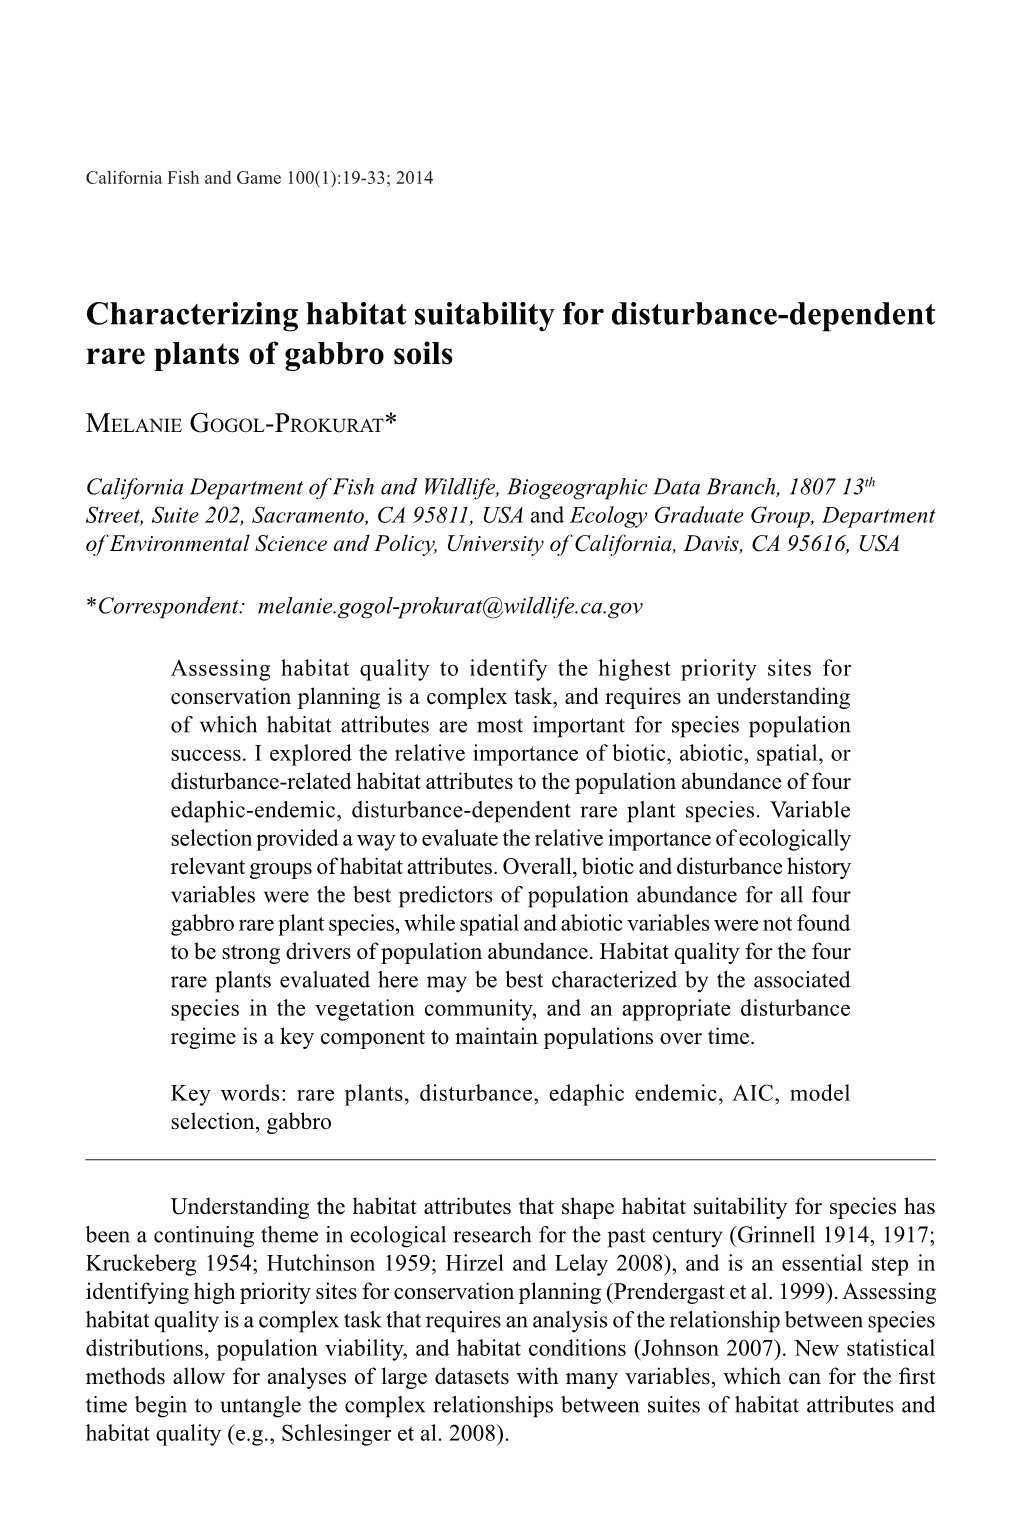 Characterizing Habitat Suitability for Disturbance-Dependent Rare Plants of Gabbro Soils